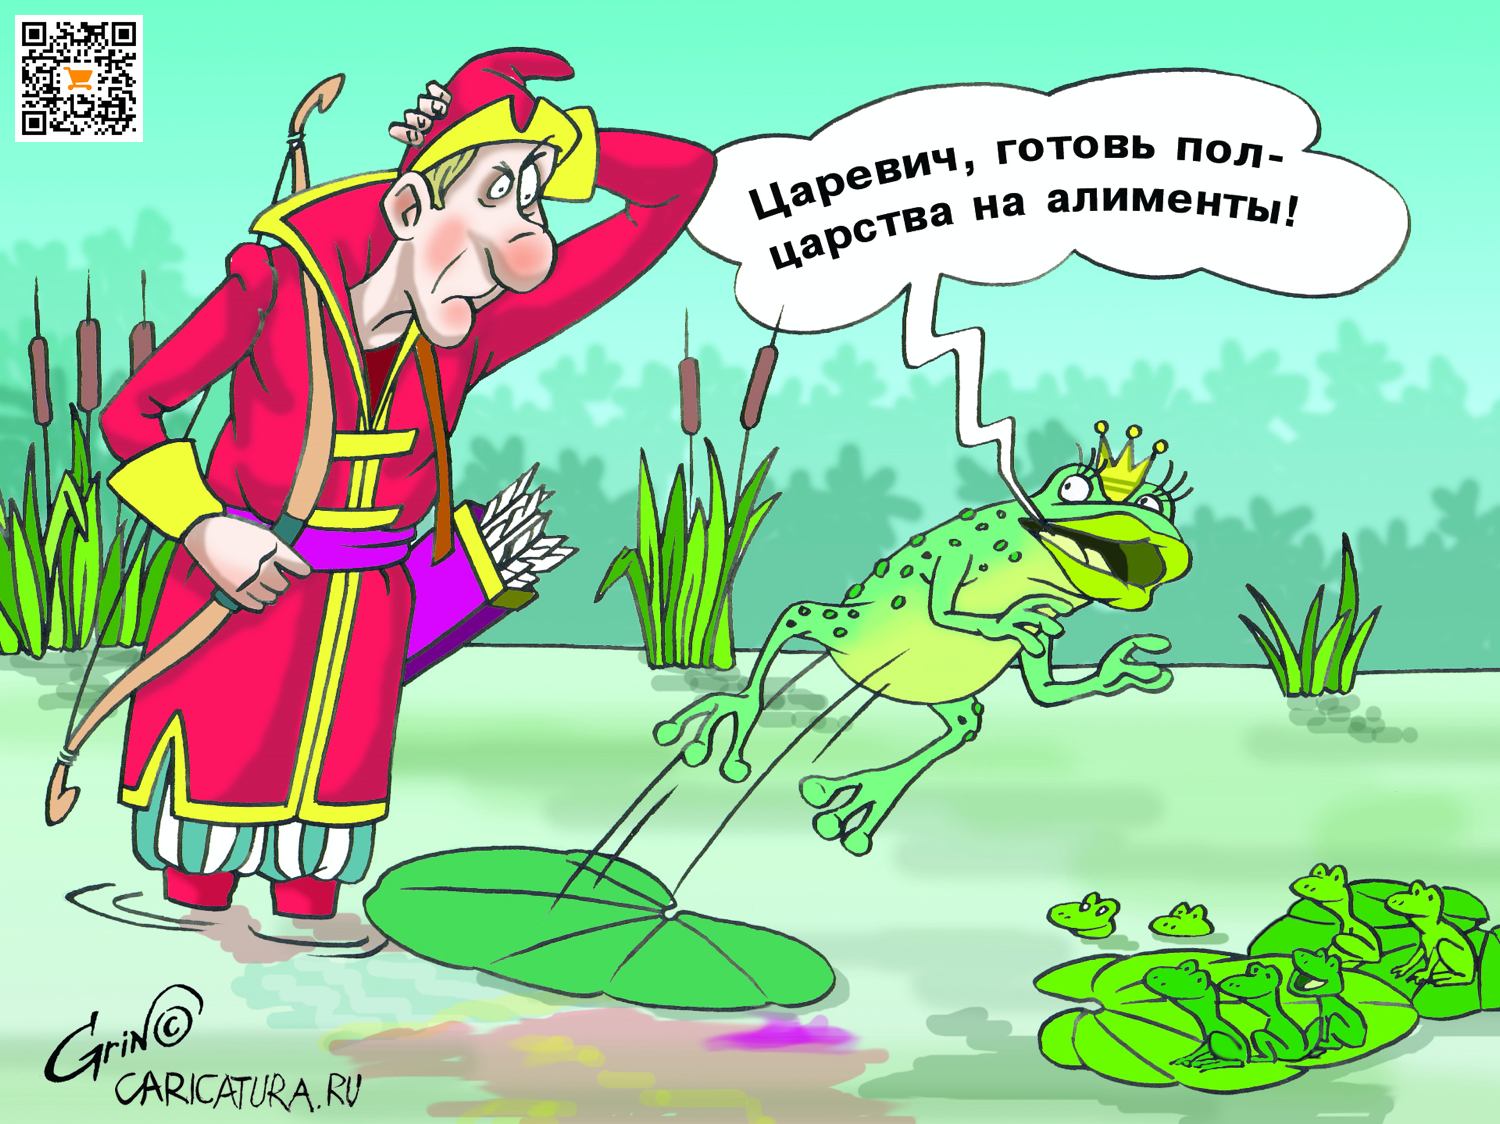 Карикатура "Алименты", Виталий Гринченко